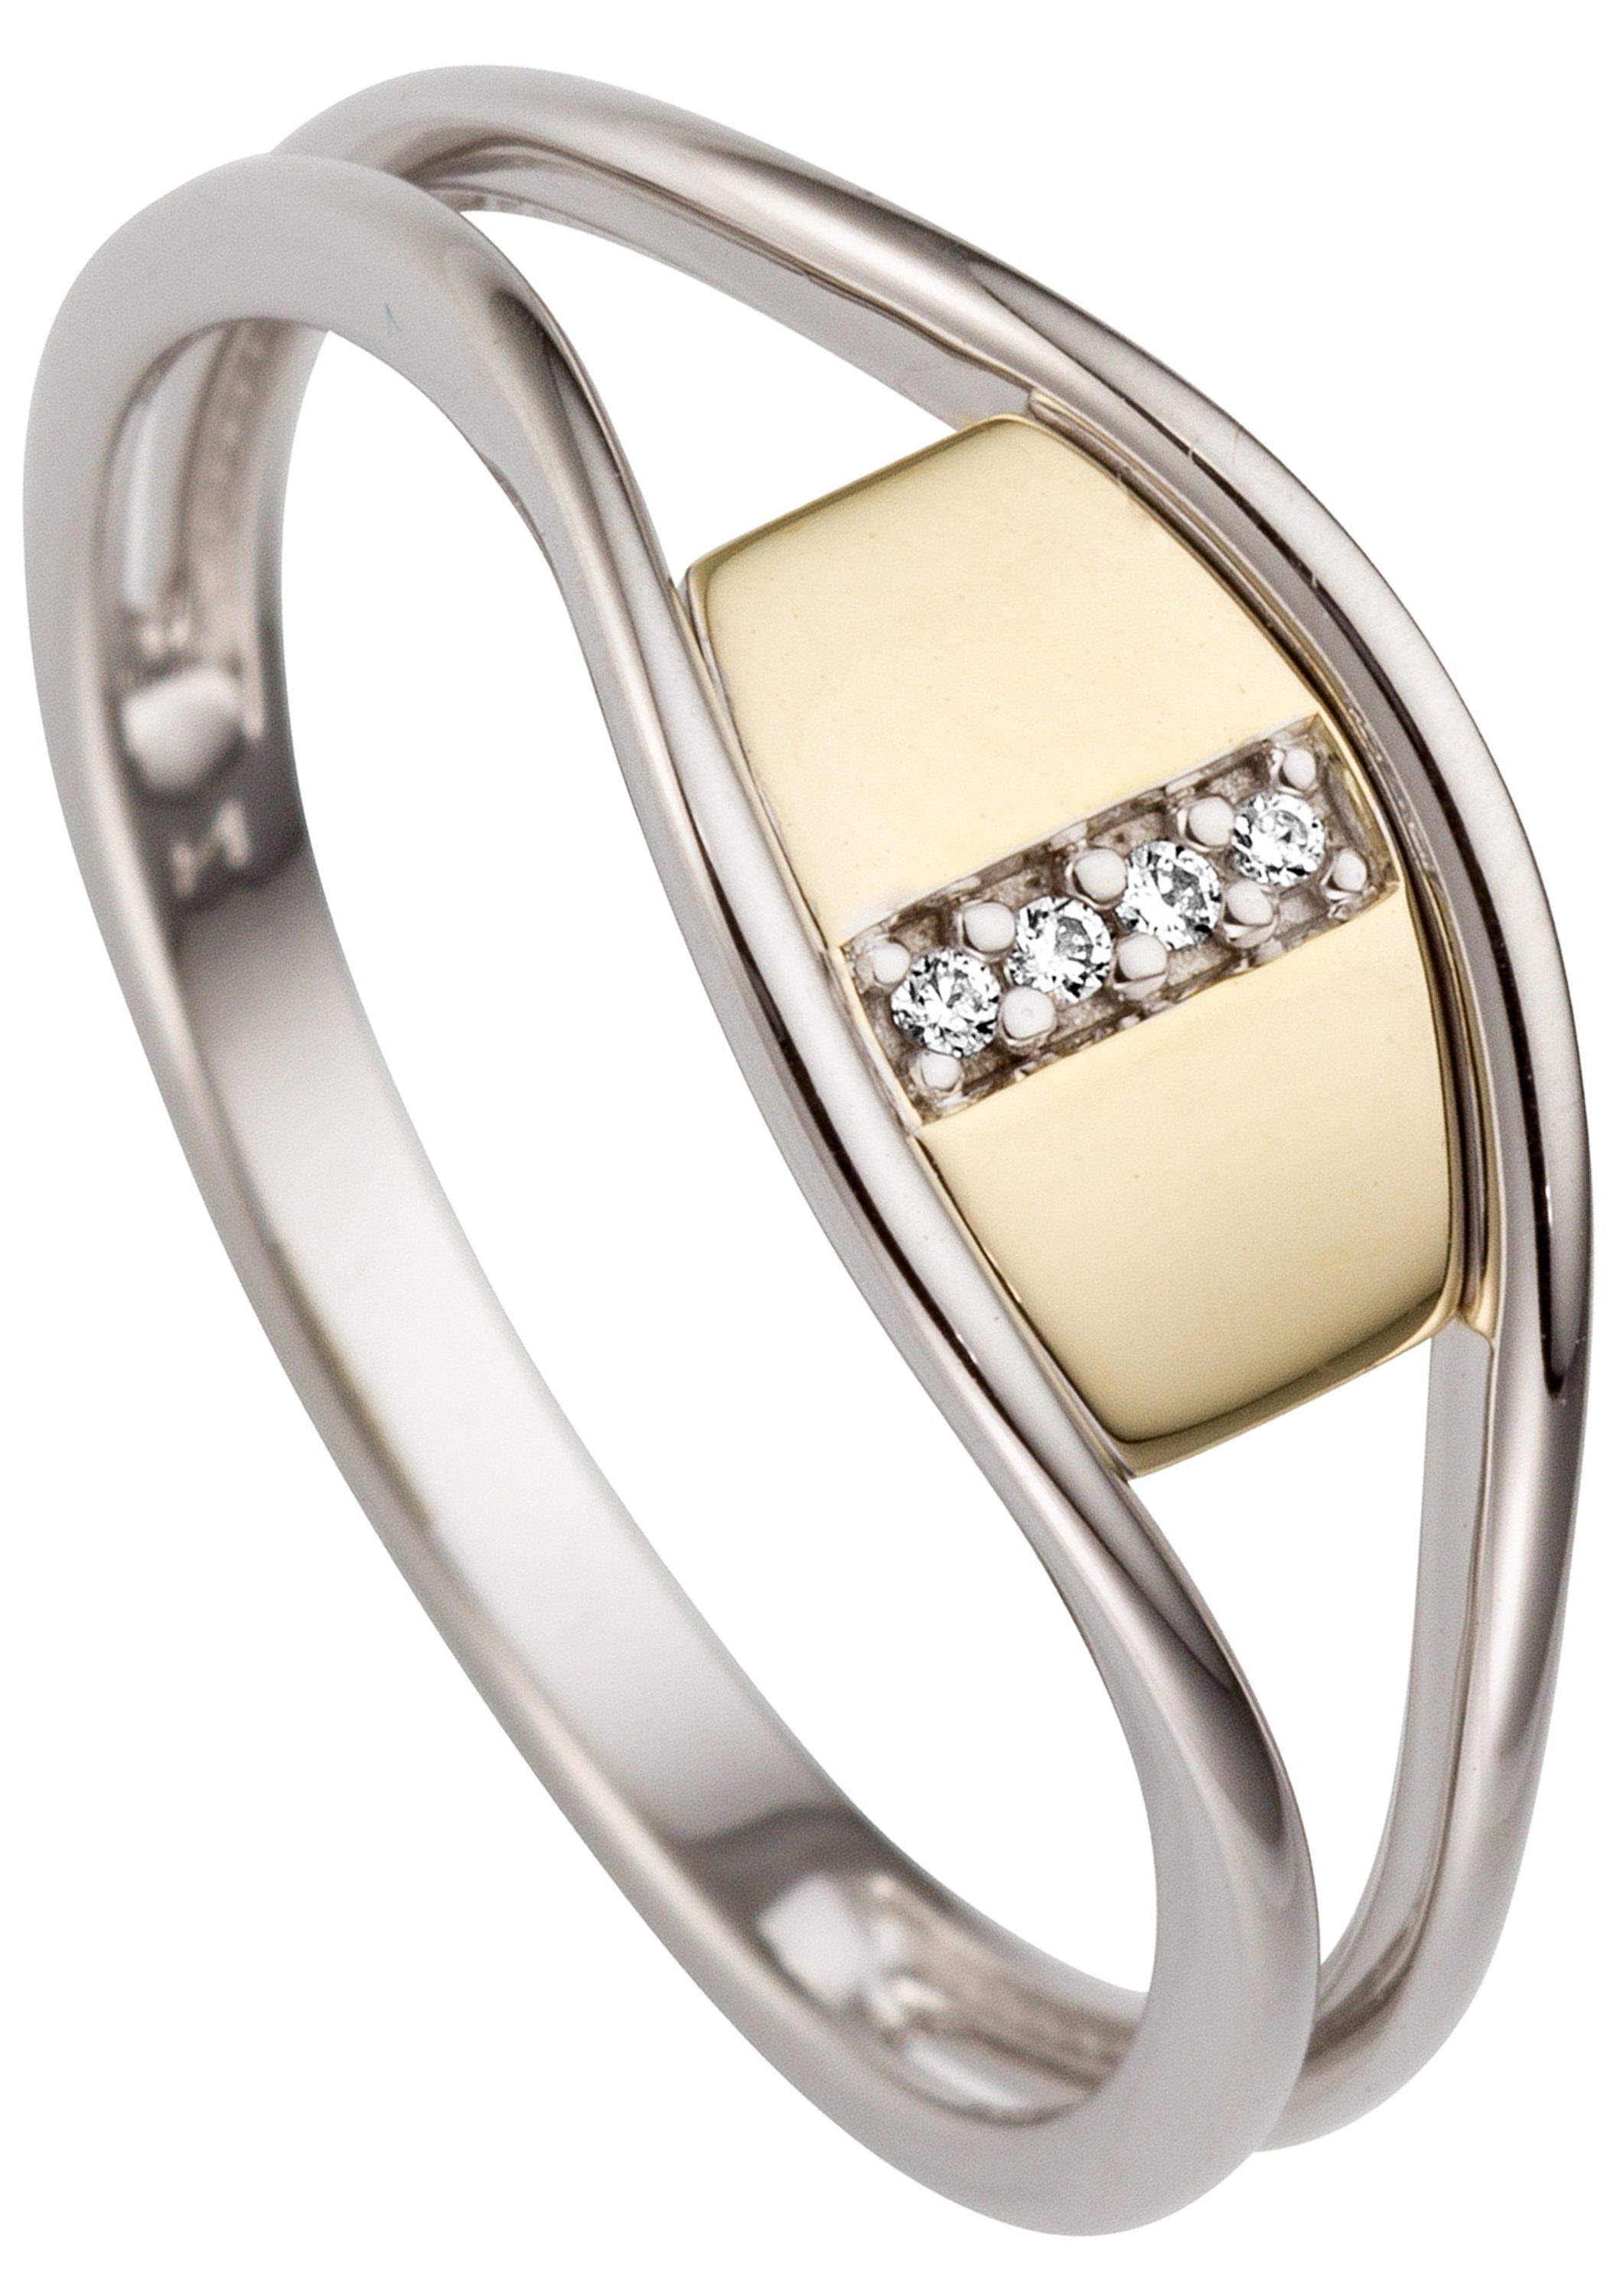 JOBO Fingerring Ring mit 4 Diamanten, 585 Gold bicolor